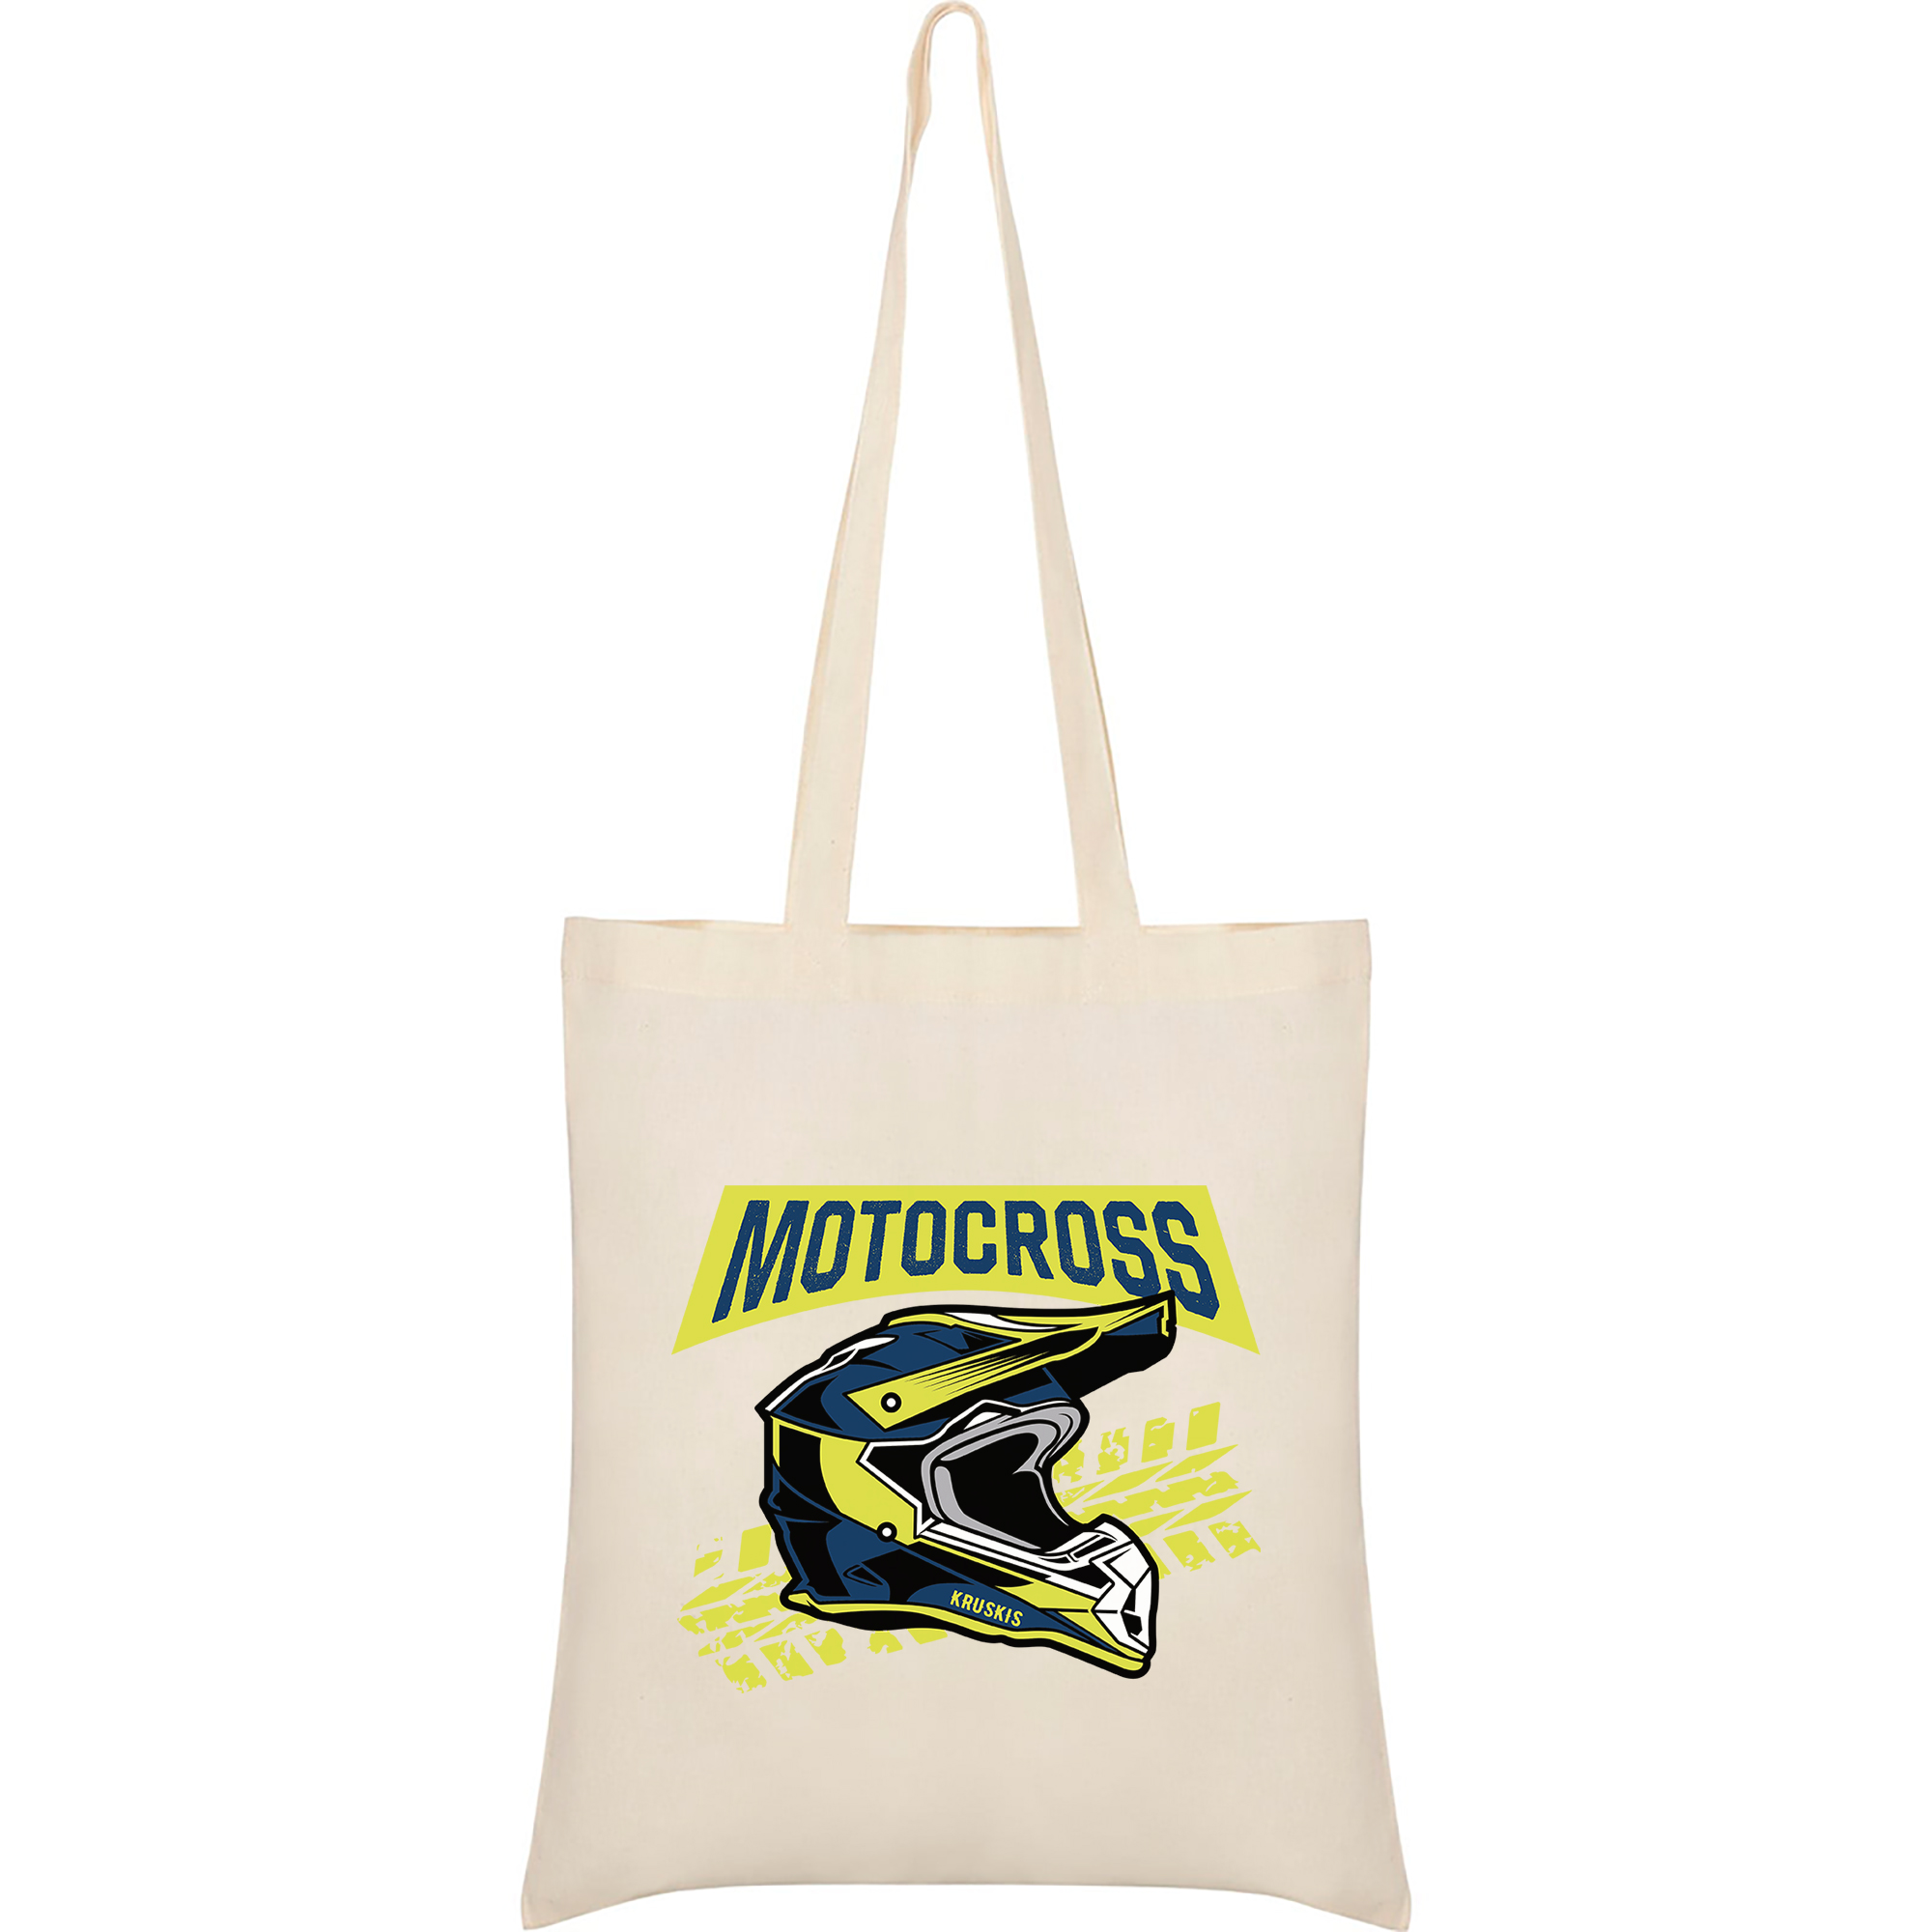 Tasche Baumwolle Moto Cross Motocross Helmet